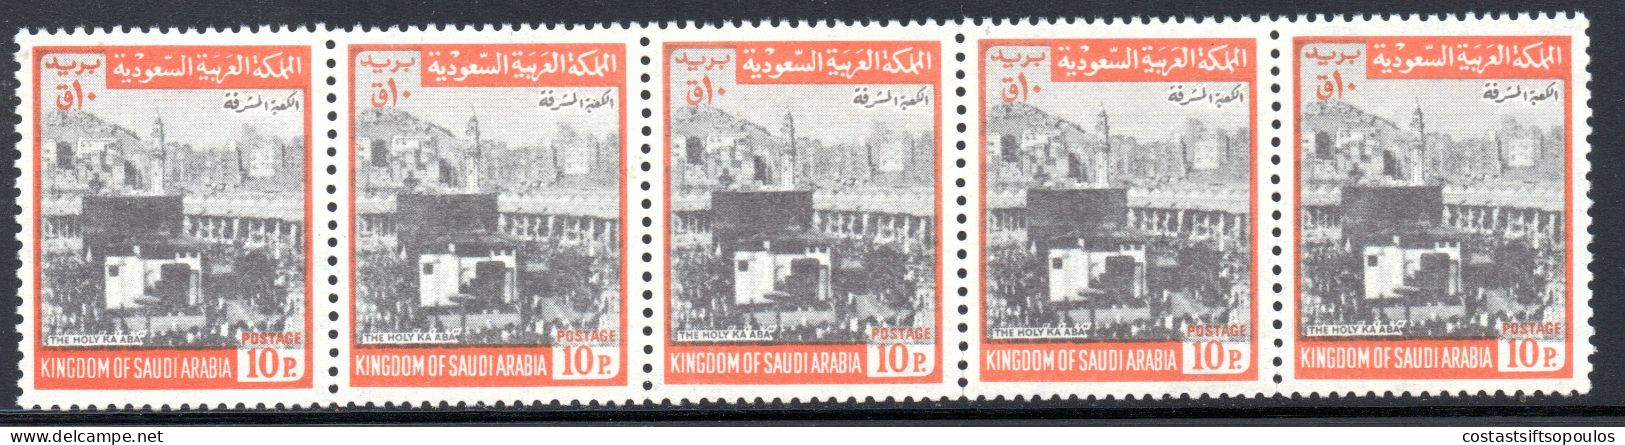 2941. SAUDI ARABIA 1969 10 P. KAABA MICH. 487 II MNH STRIP OF 5 - Saudi Arabia